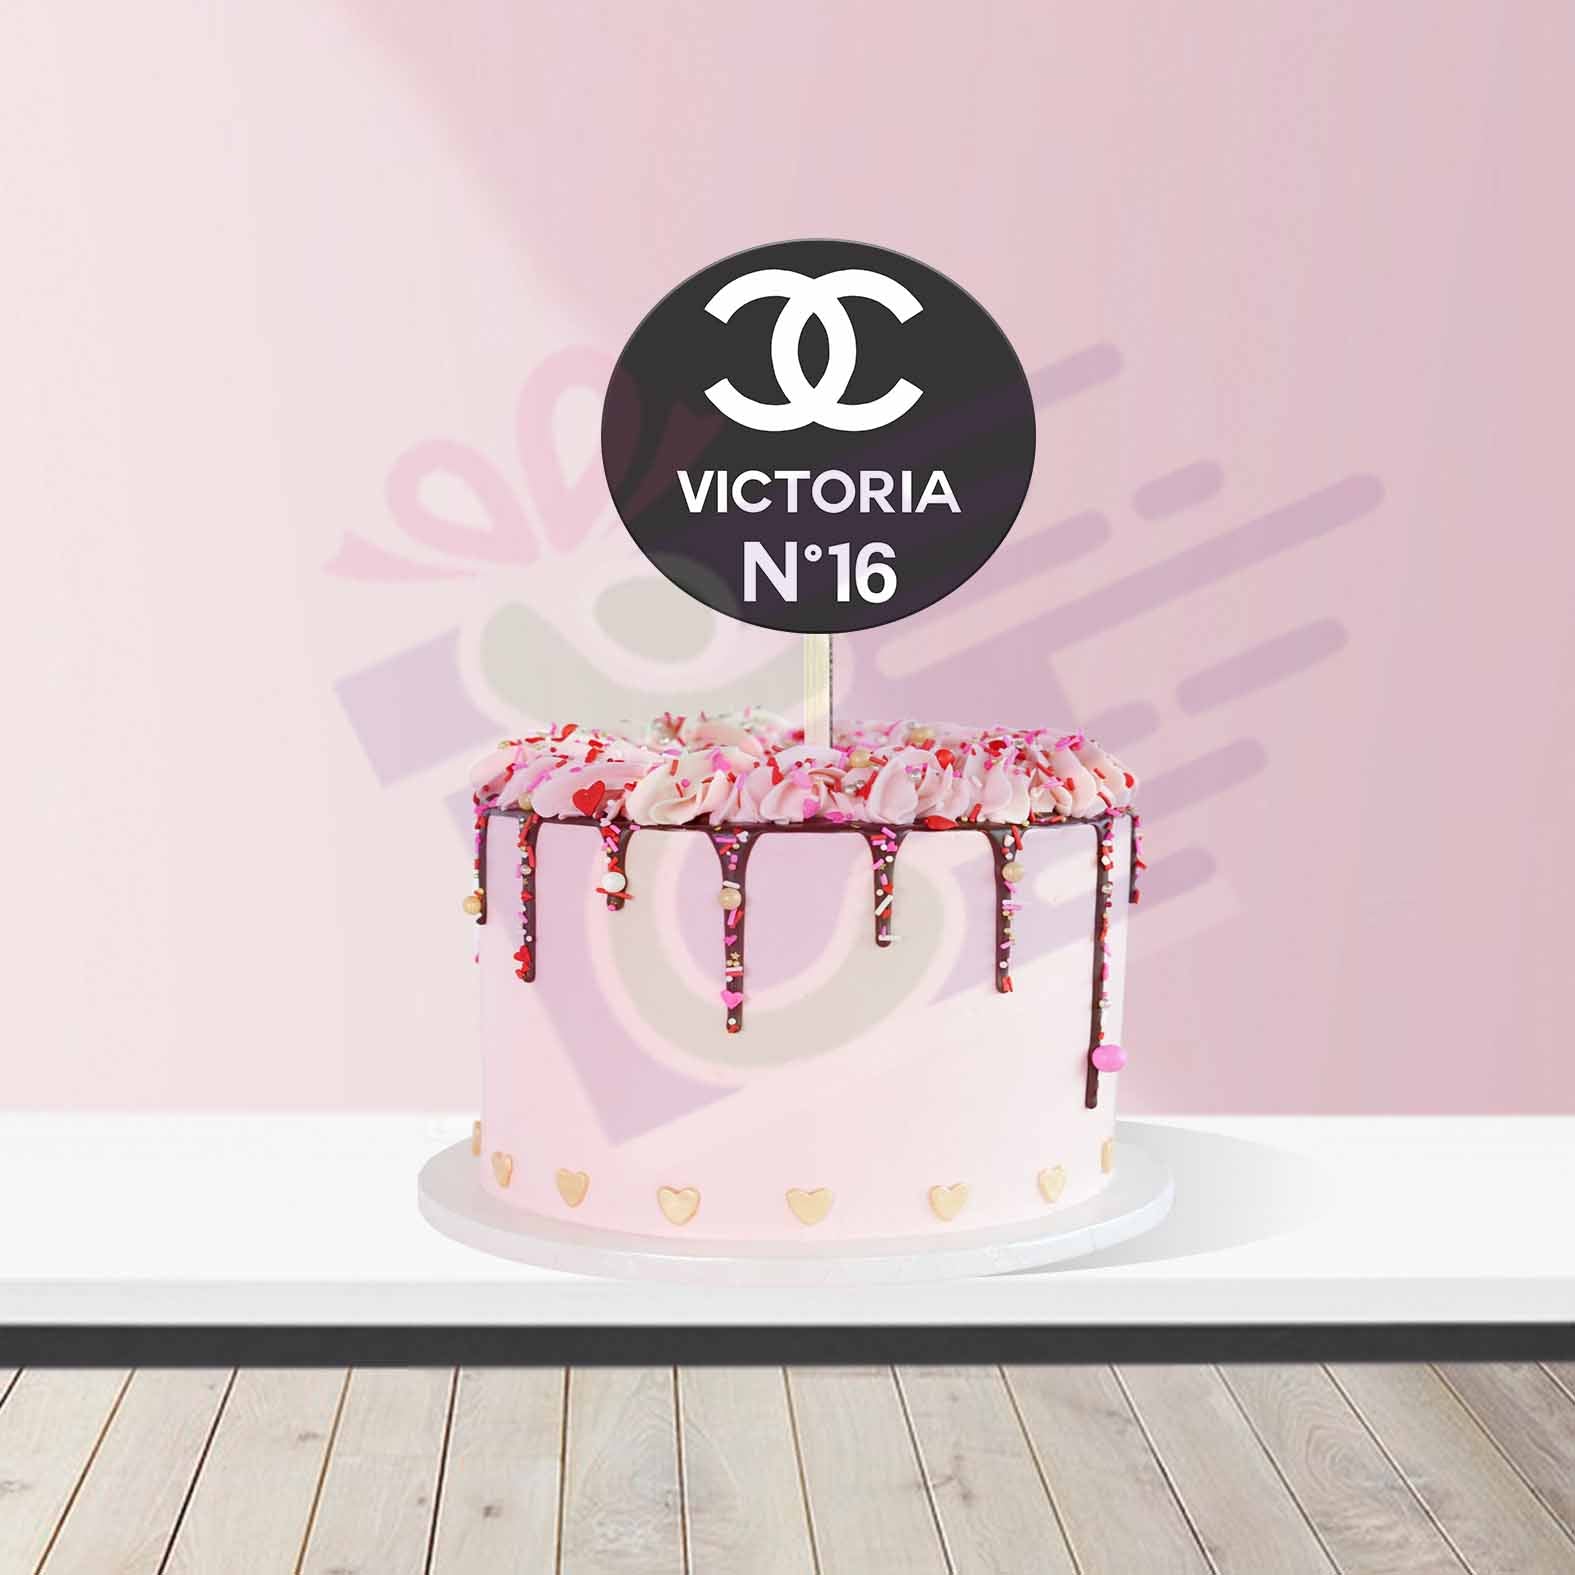 Chanel cake topper – 5ouza3balat